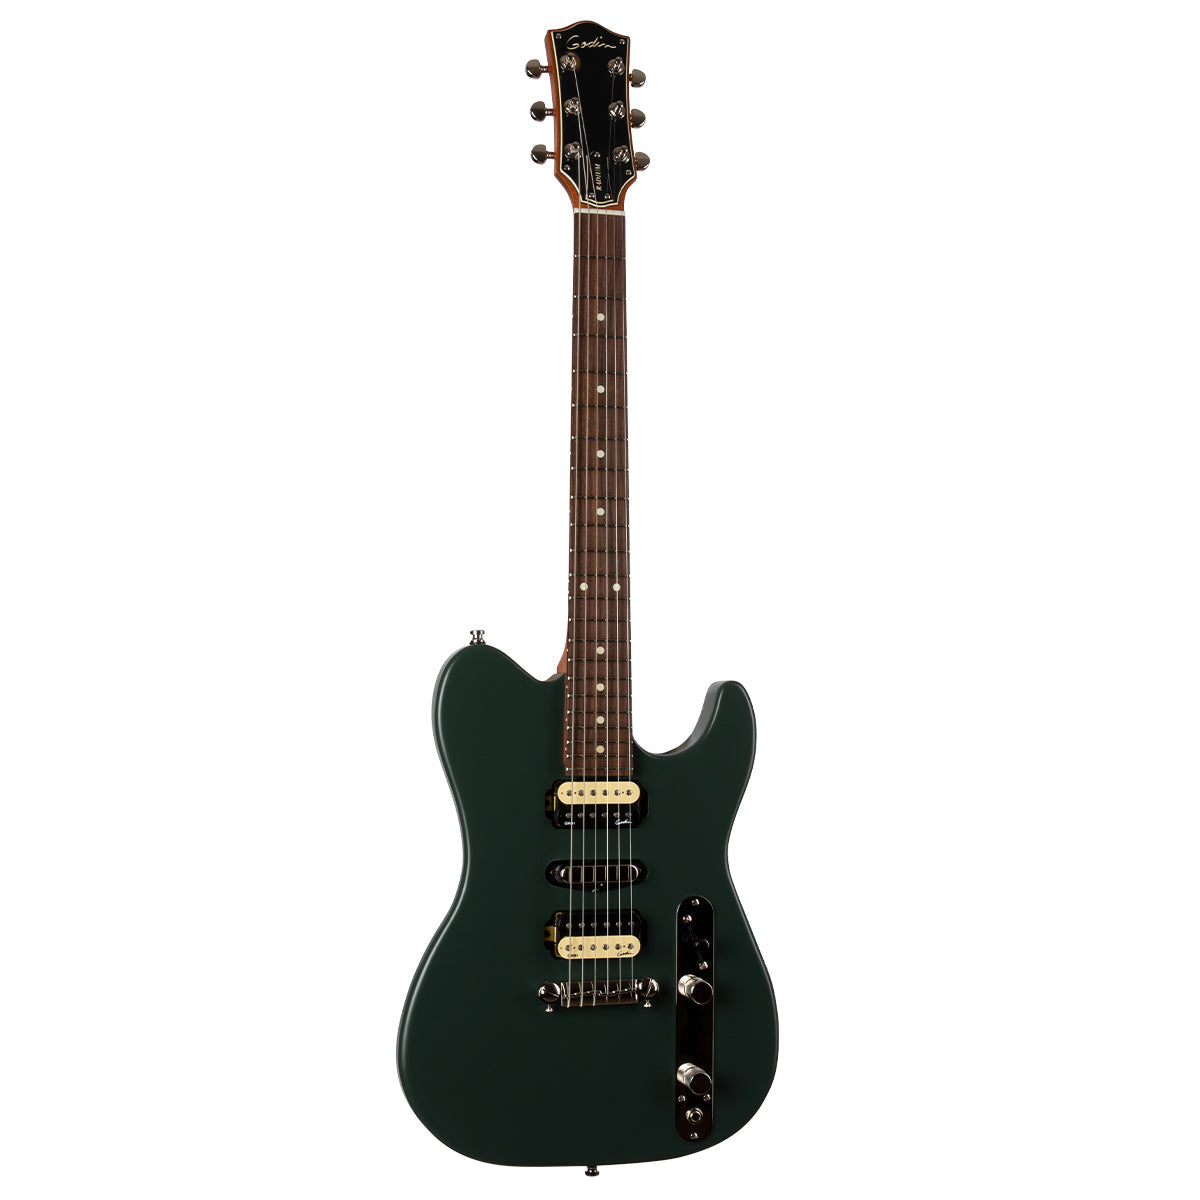 Godin Radium Electric Guitar ~ Matte Green, Electric Guitar for sale at Richards Guitars.